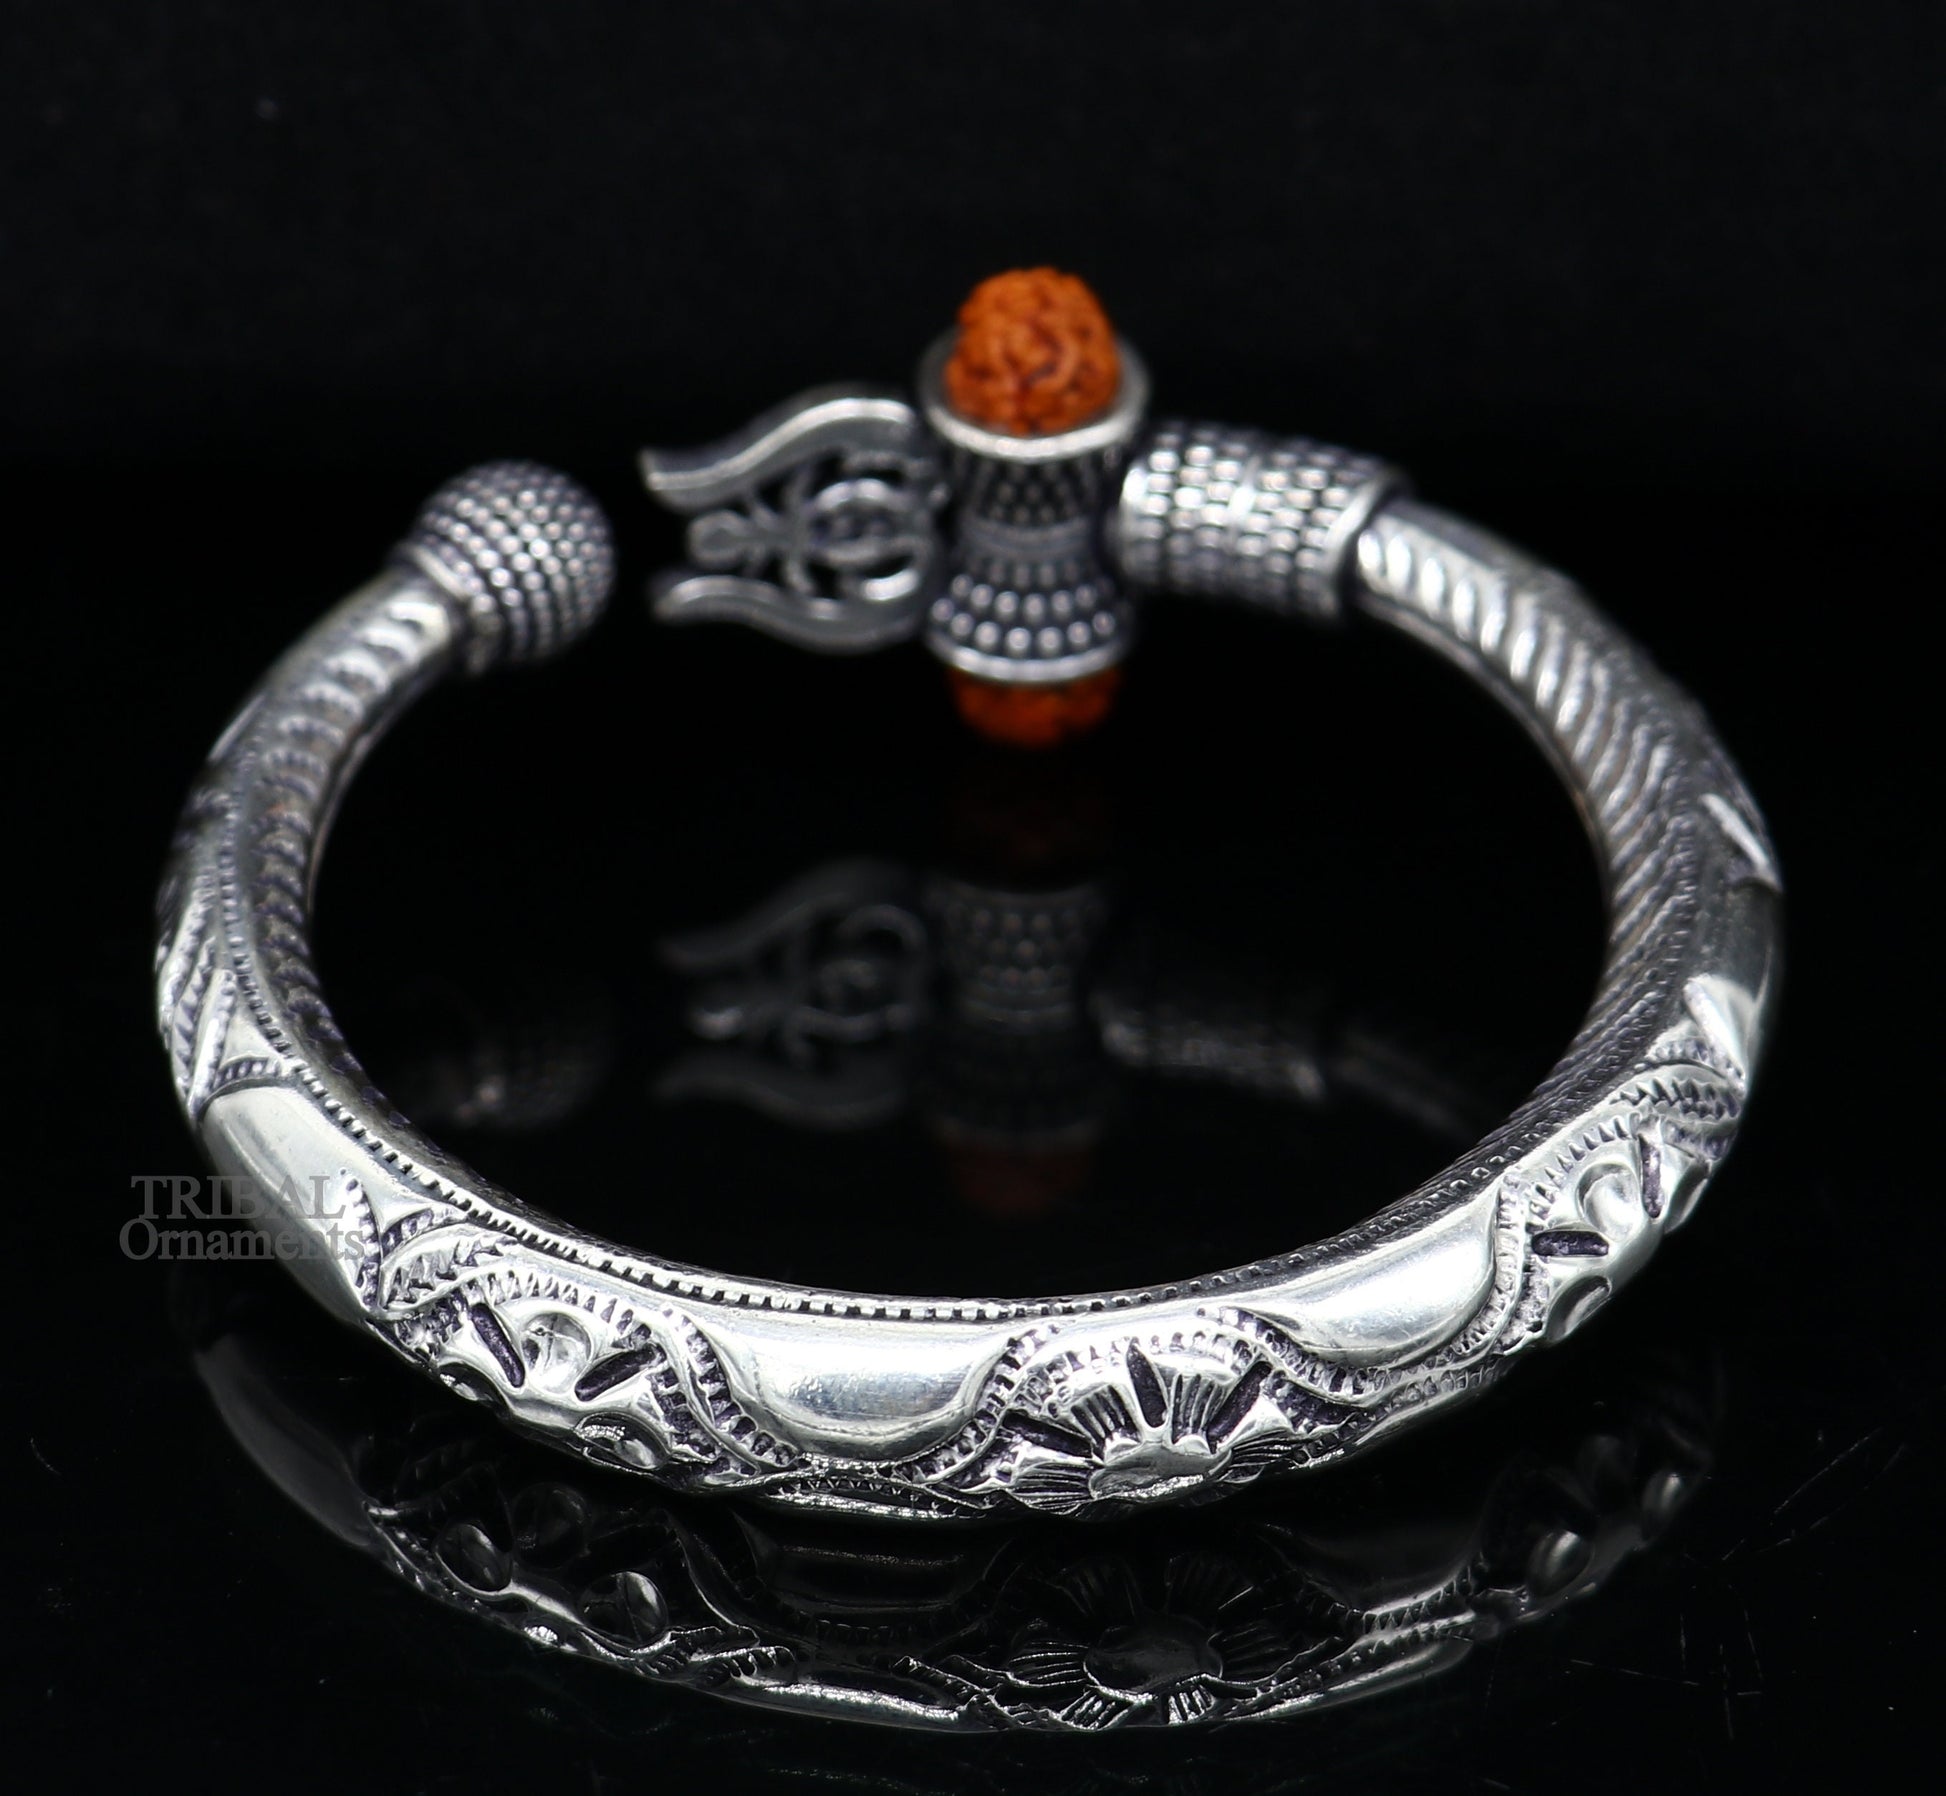 Exclusive 925 Sterling silver handmade chitai work Lord Shiva trident trishul bangle bracelet natural Rudraksha beads customized kada nsk441 - TRIBAL ORNAMENTS